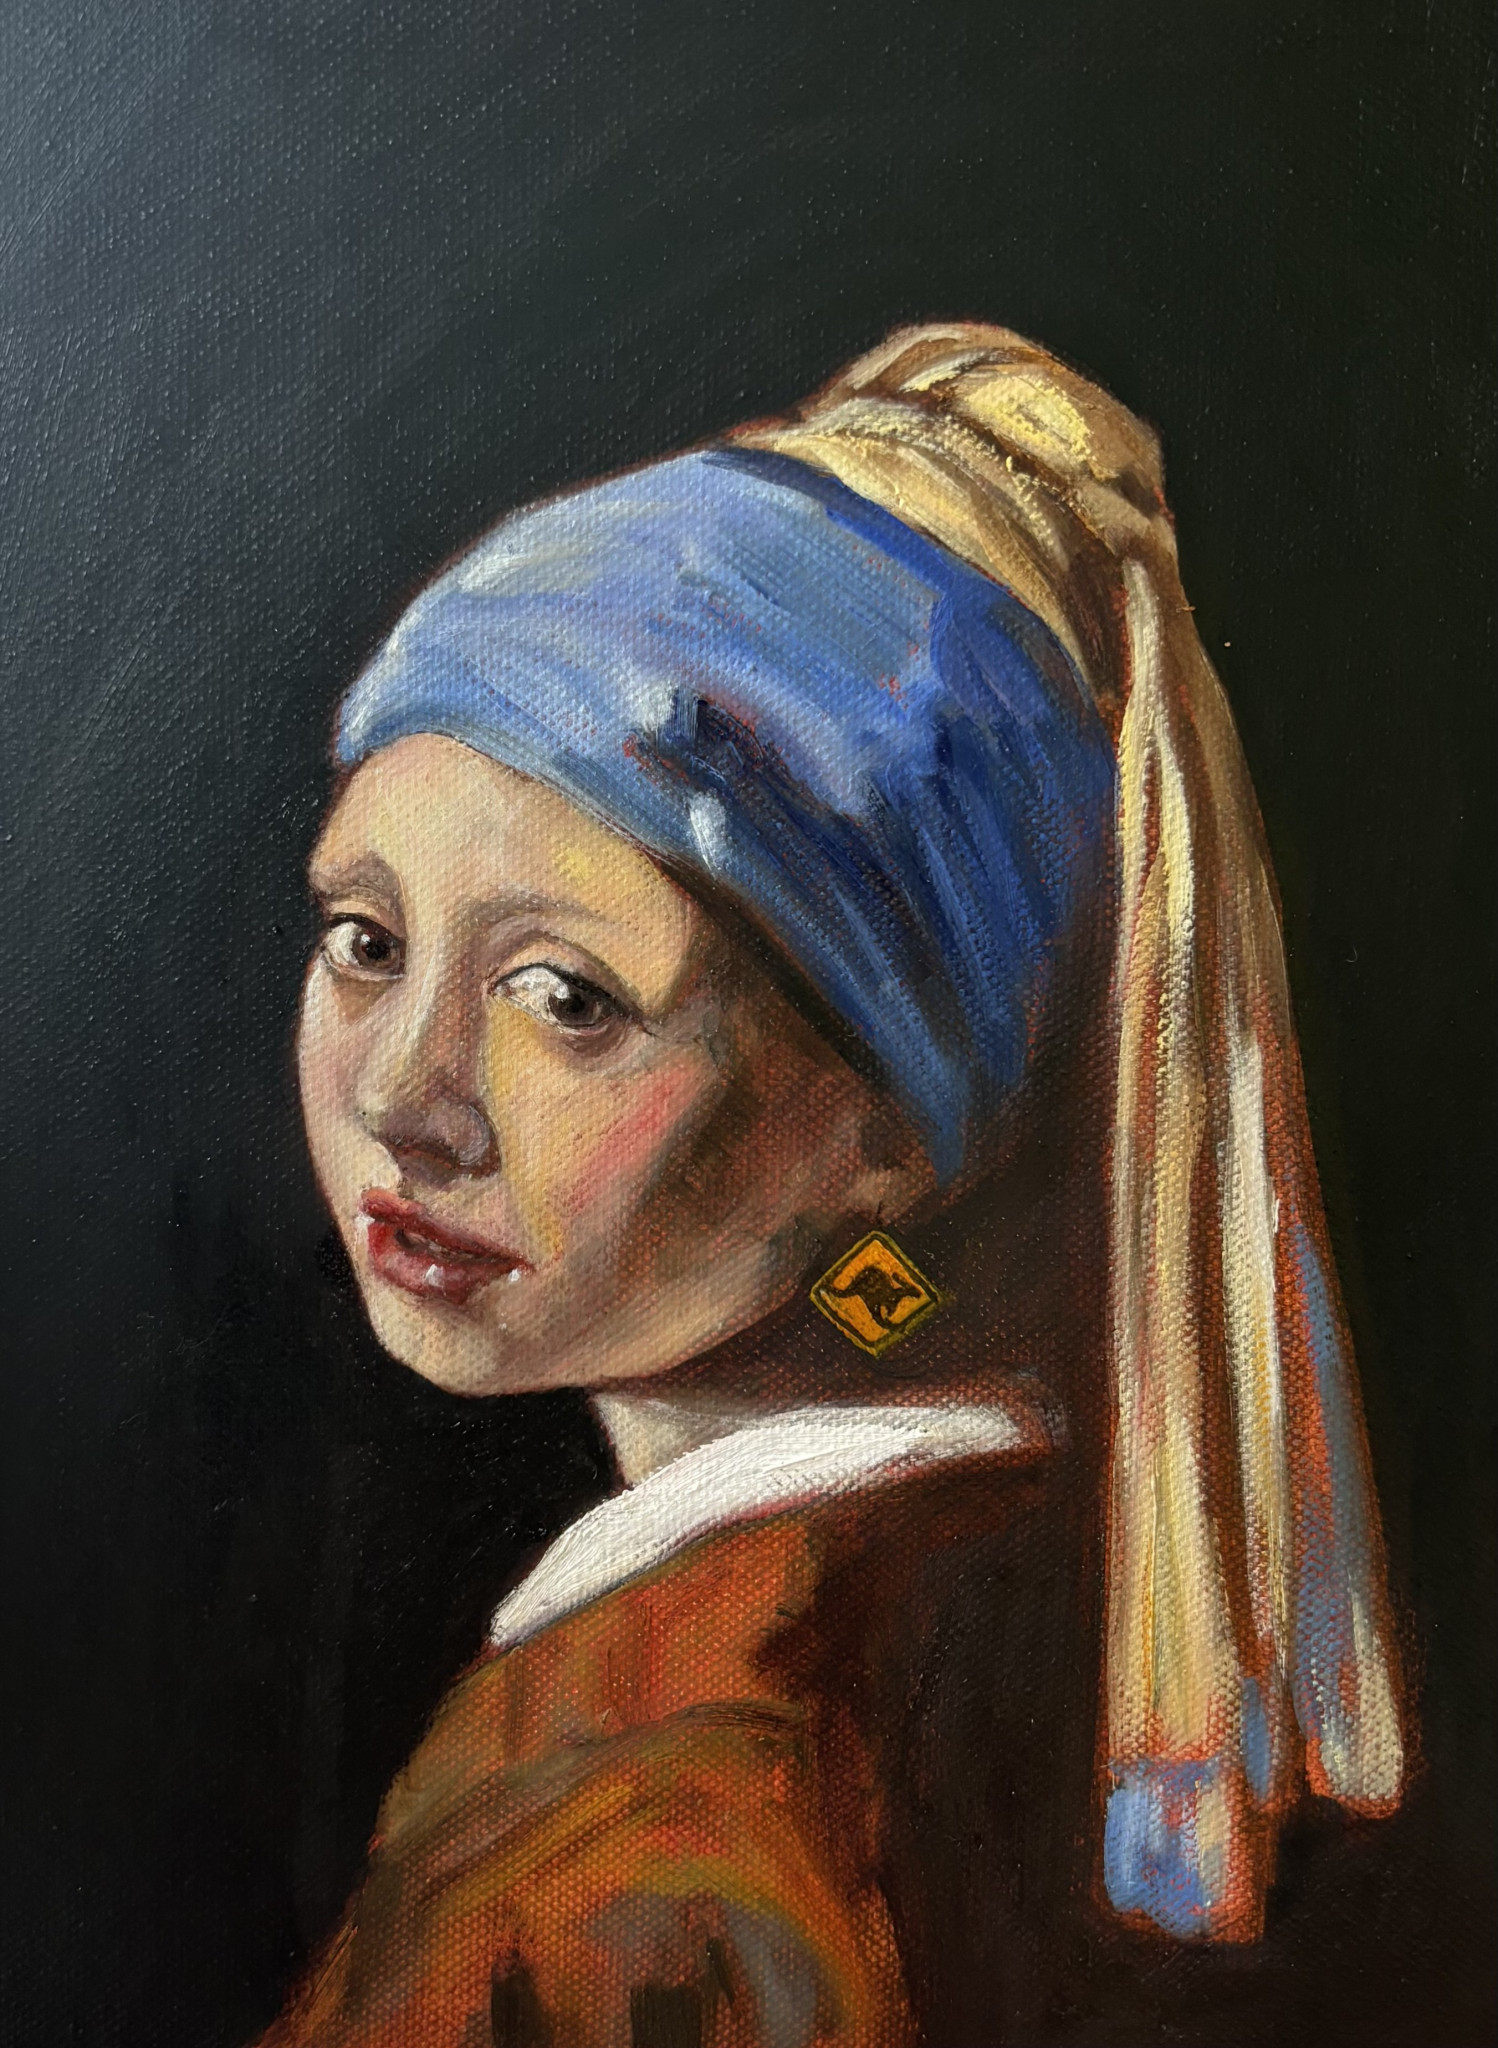 Girl with Kangaroo Earring by Lisa May (Vermeer).